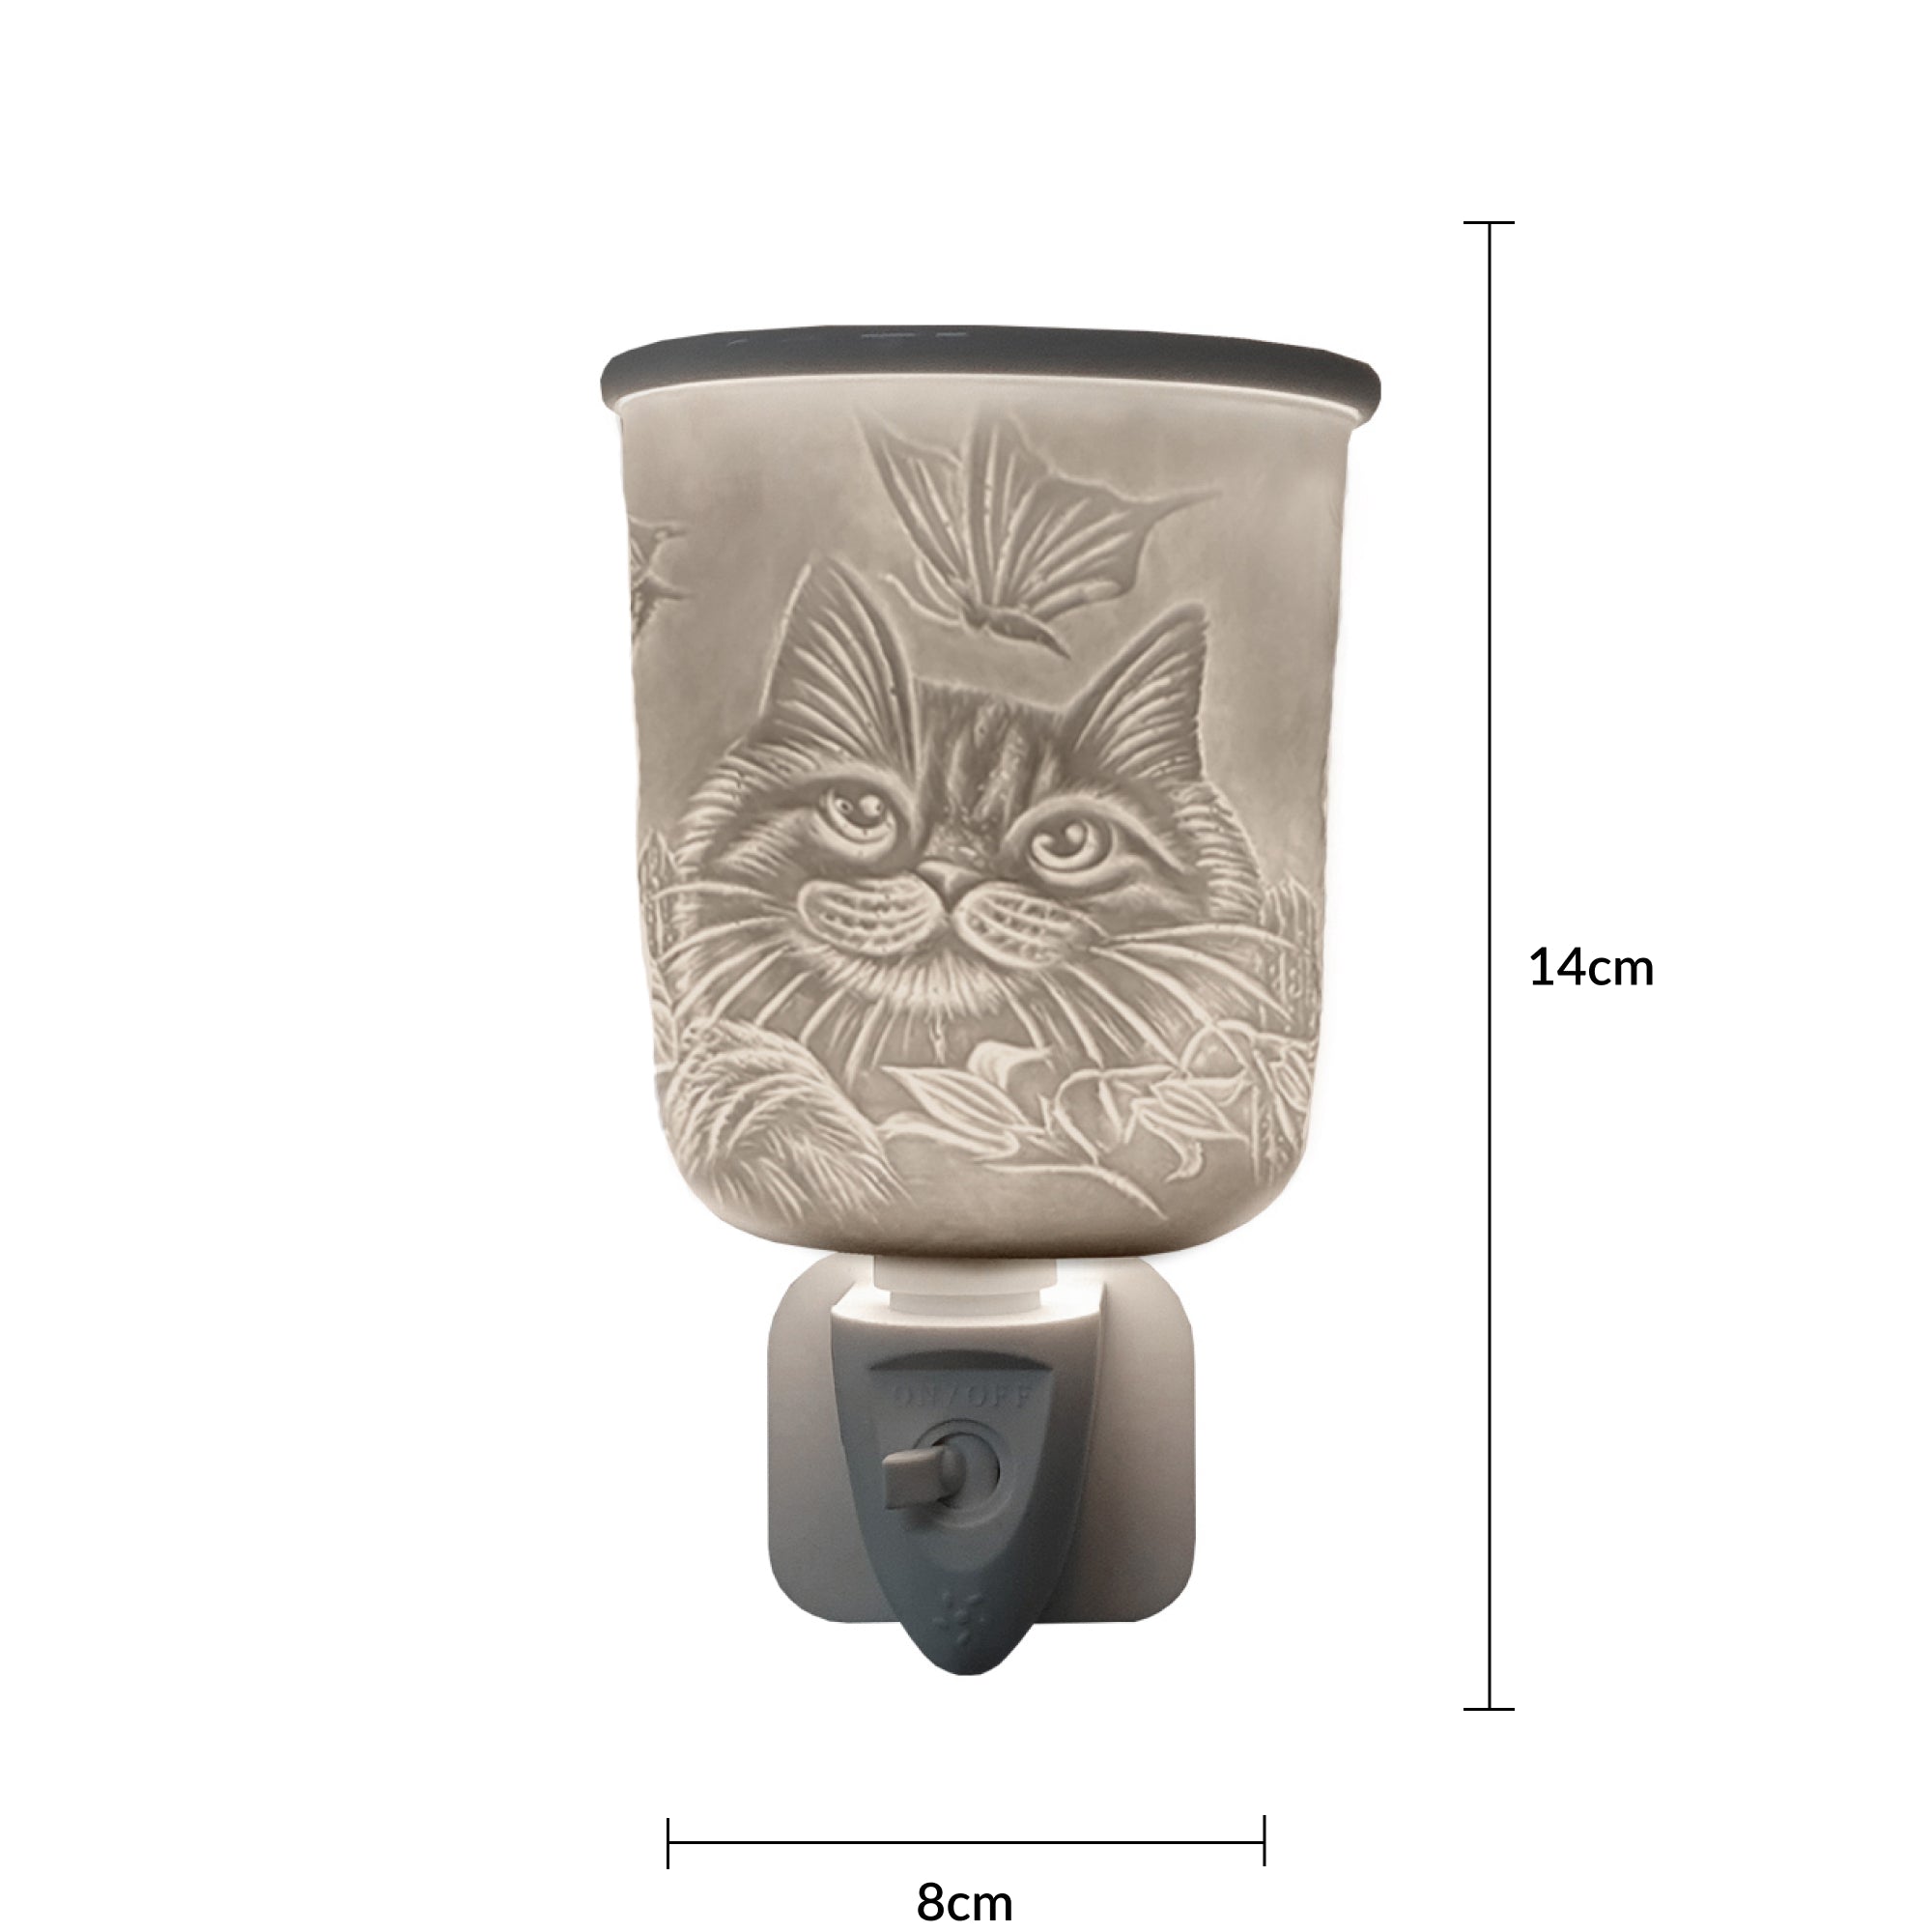 Cello - Porcelain Plug In Electric Melt Warmer - Cat